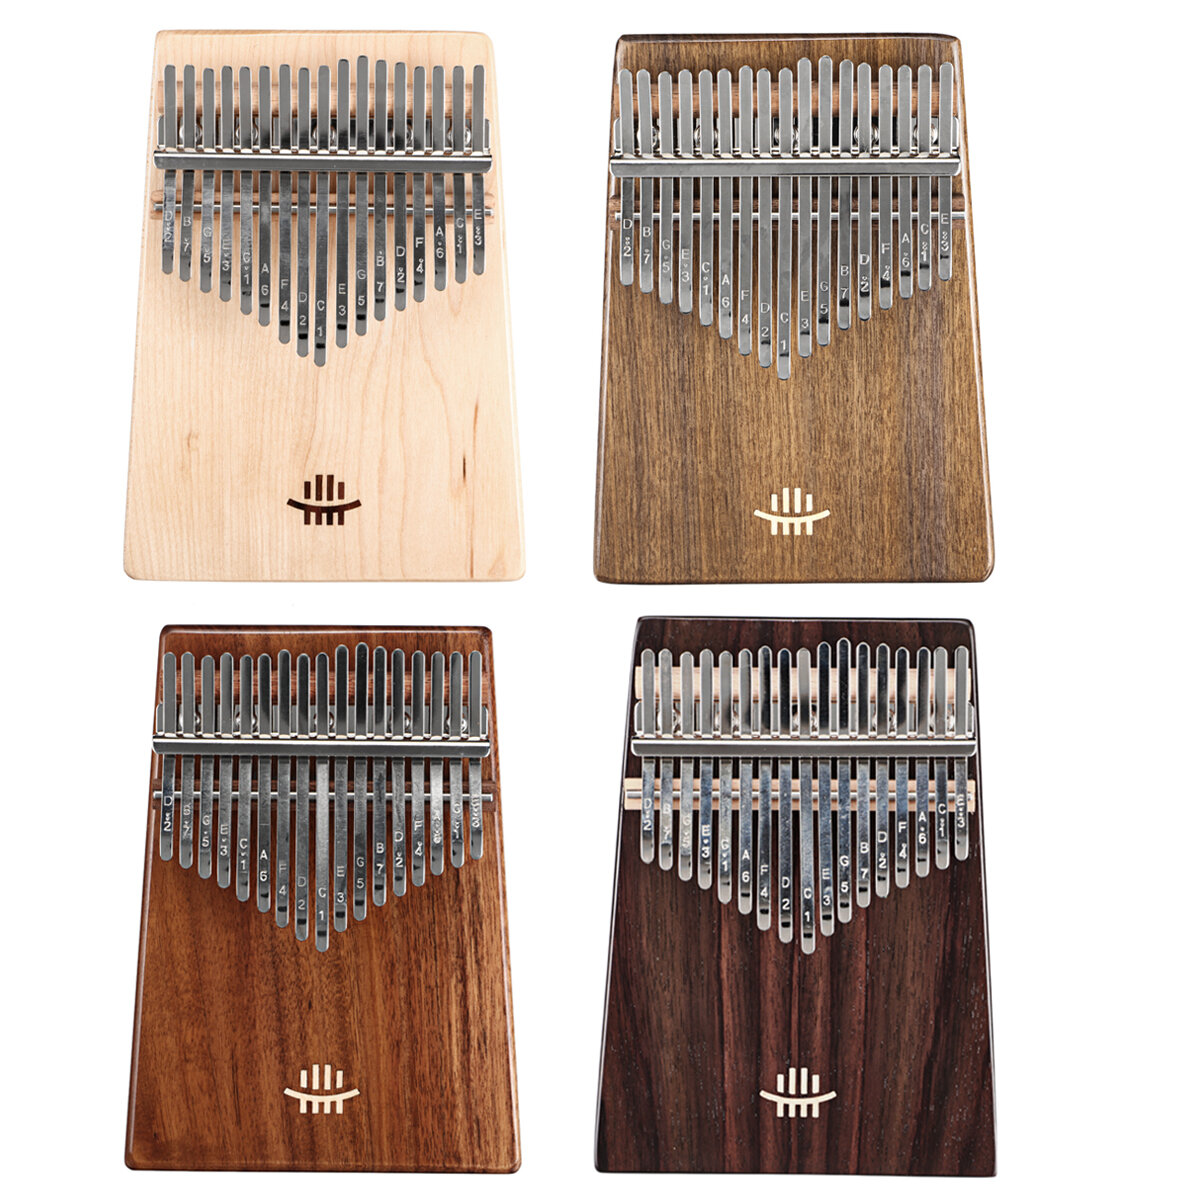 HLURU 17 toetsen hout Kalimba bodem gat stijl mahonie duim piano muziekinstrument voor beginners